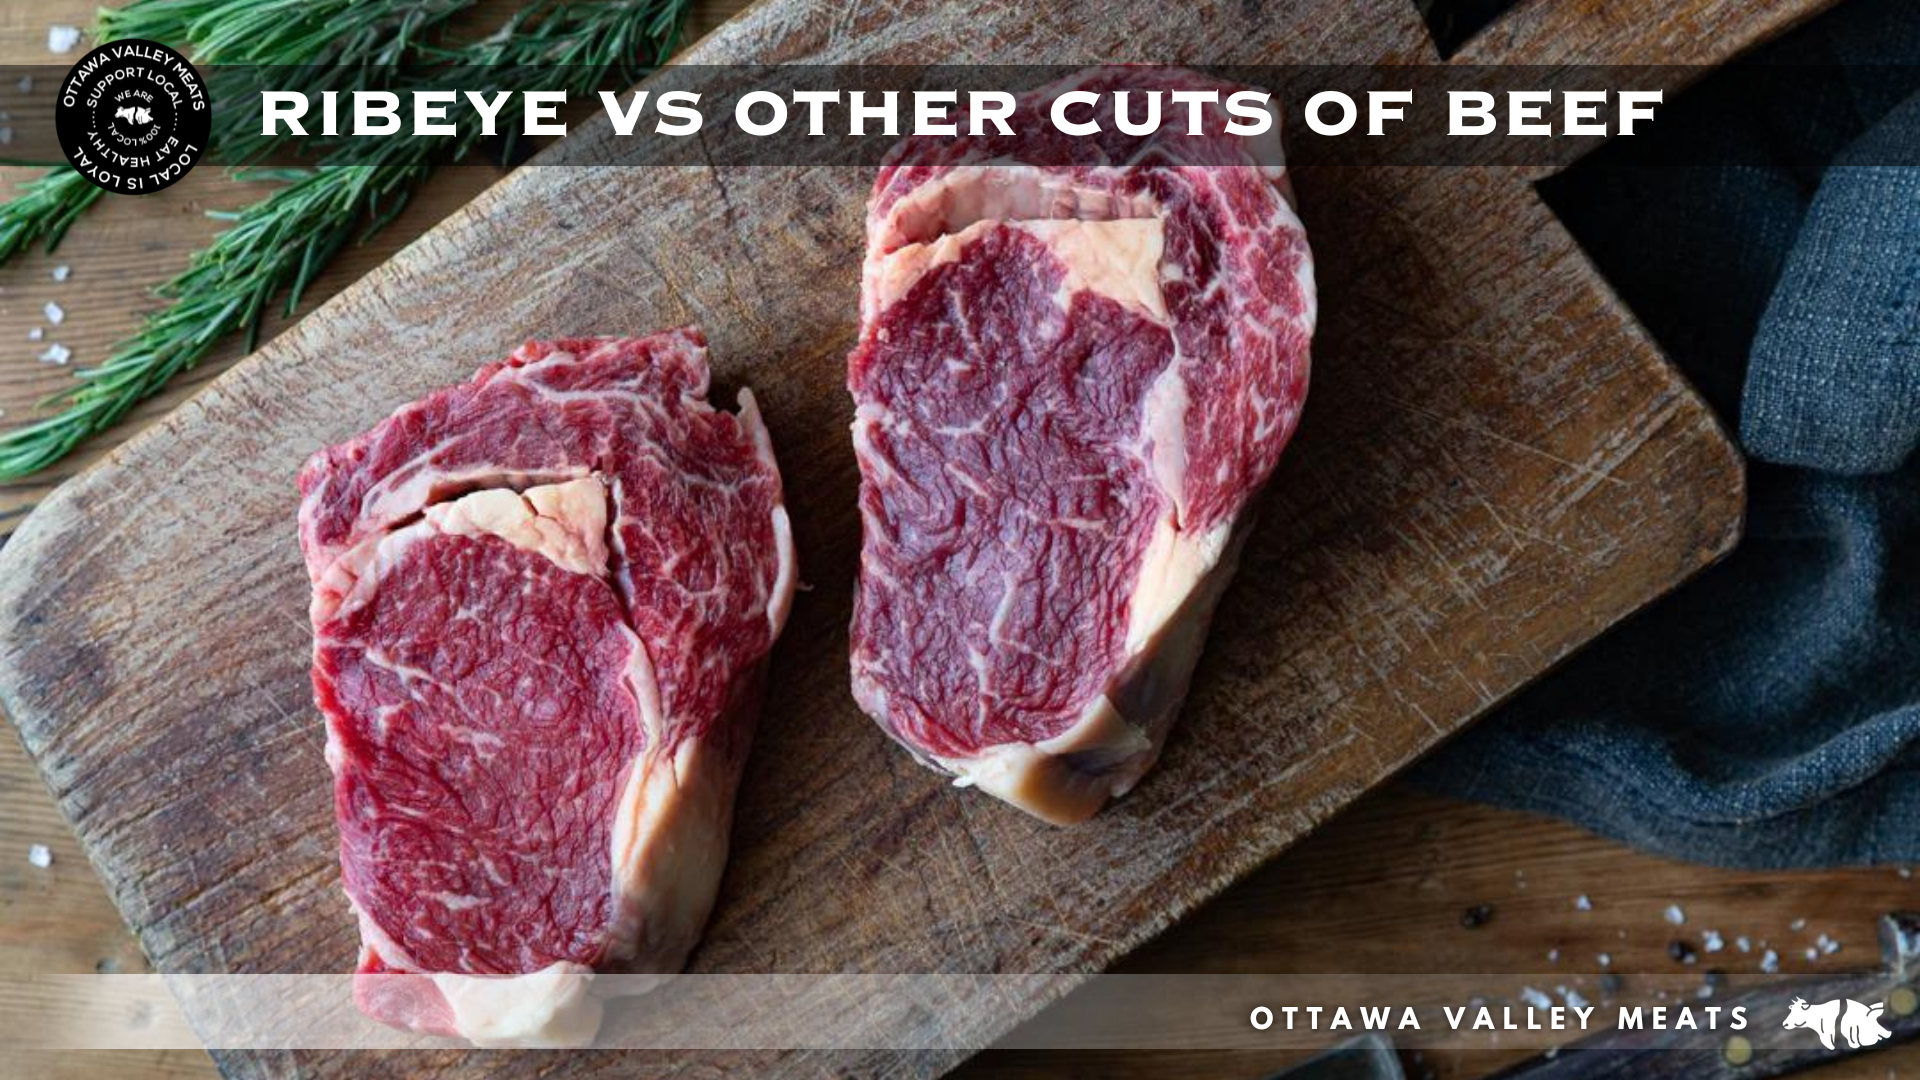 Why Ribeye Steak instead of other cuts?